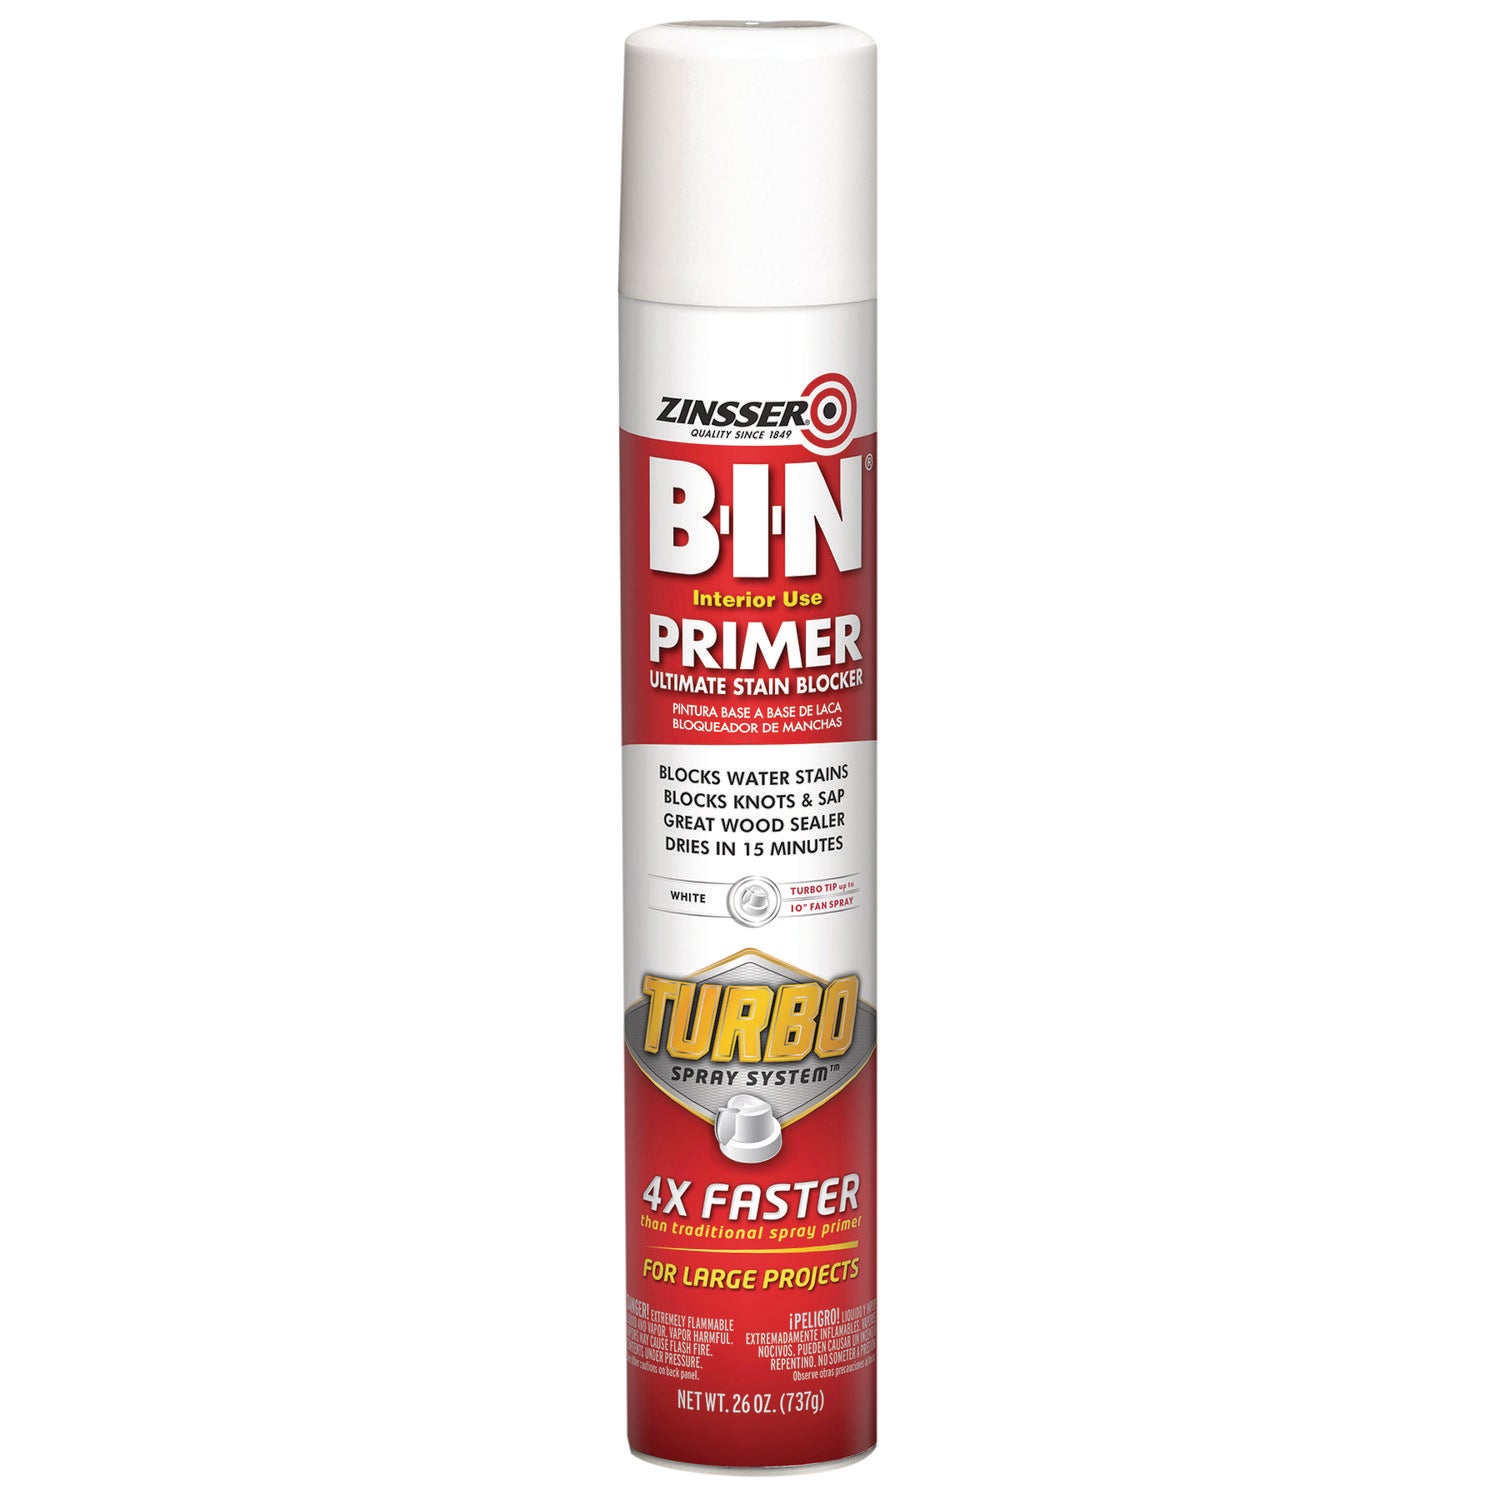 bin-aerosol-primer-with-turbo-spray-system-interior-flat-white-26-oz-aerosol-can-6-carton_rst356880 - 1